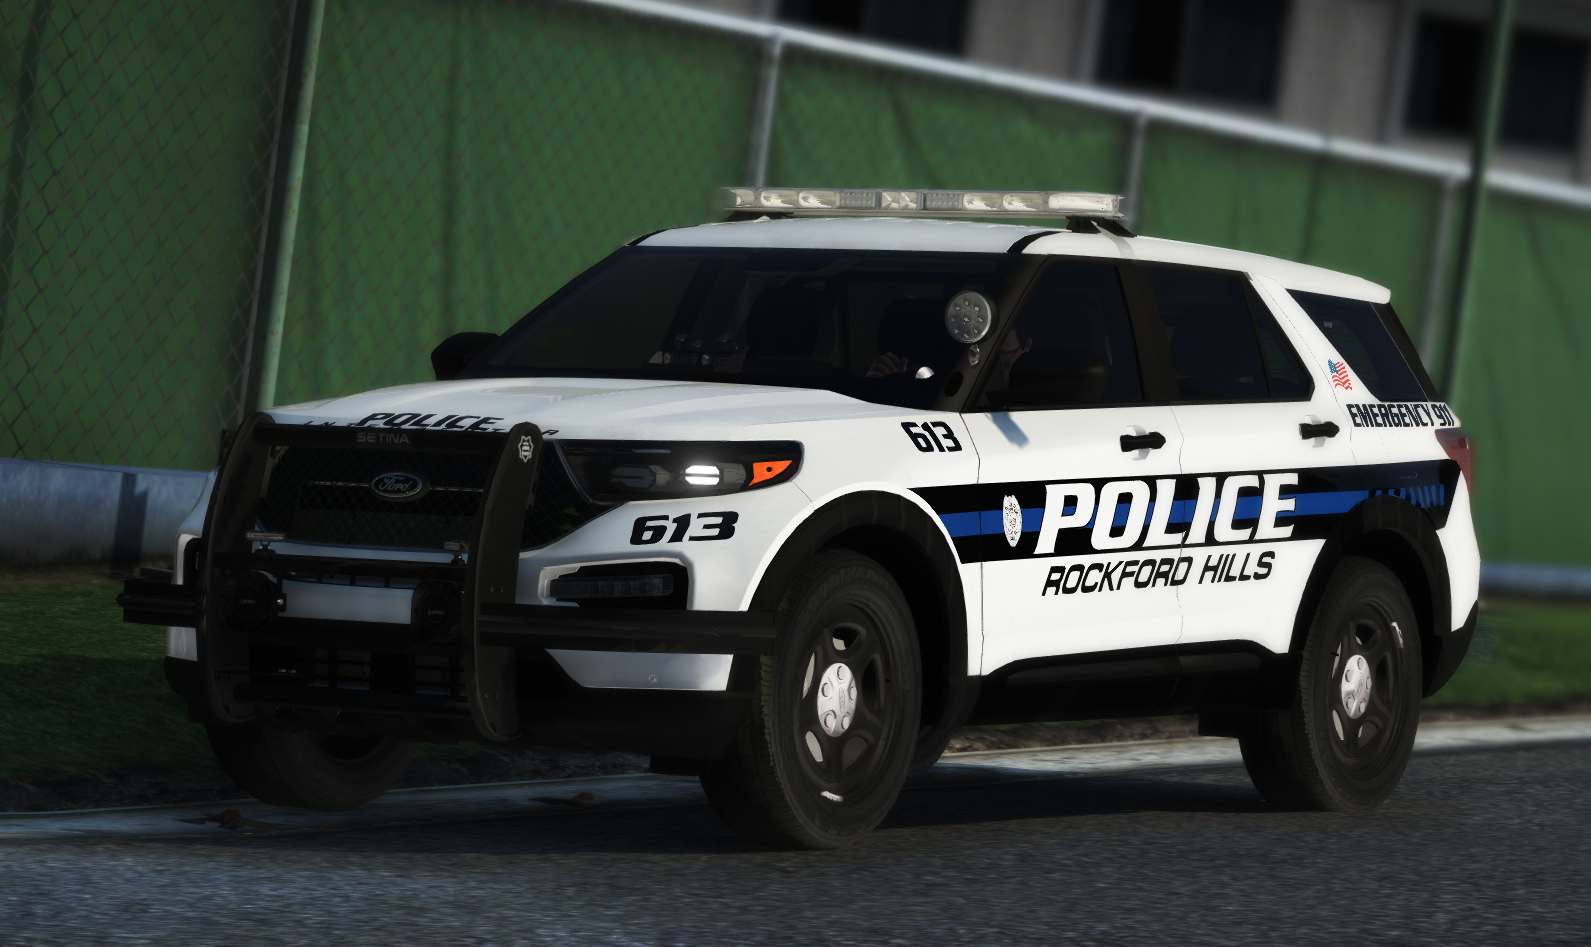 TEXTURE - Rockford Hills Police | Modification Universe